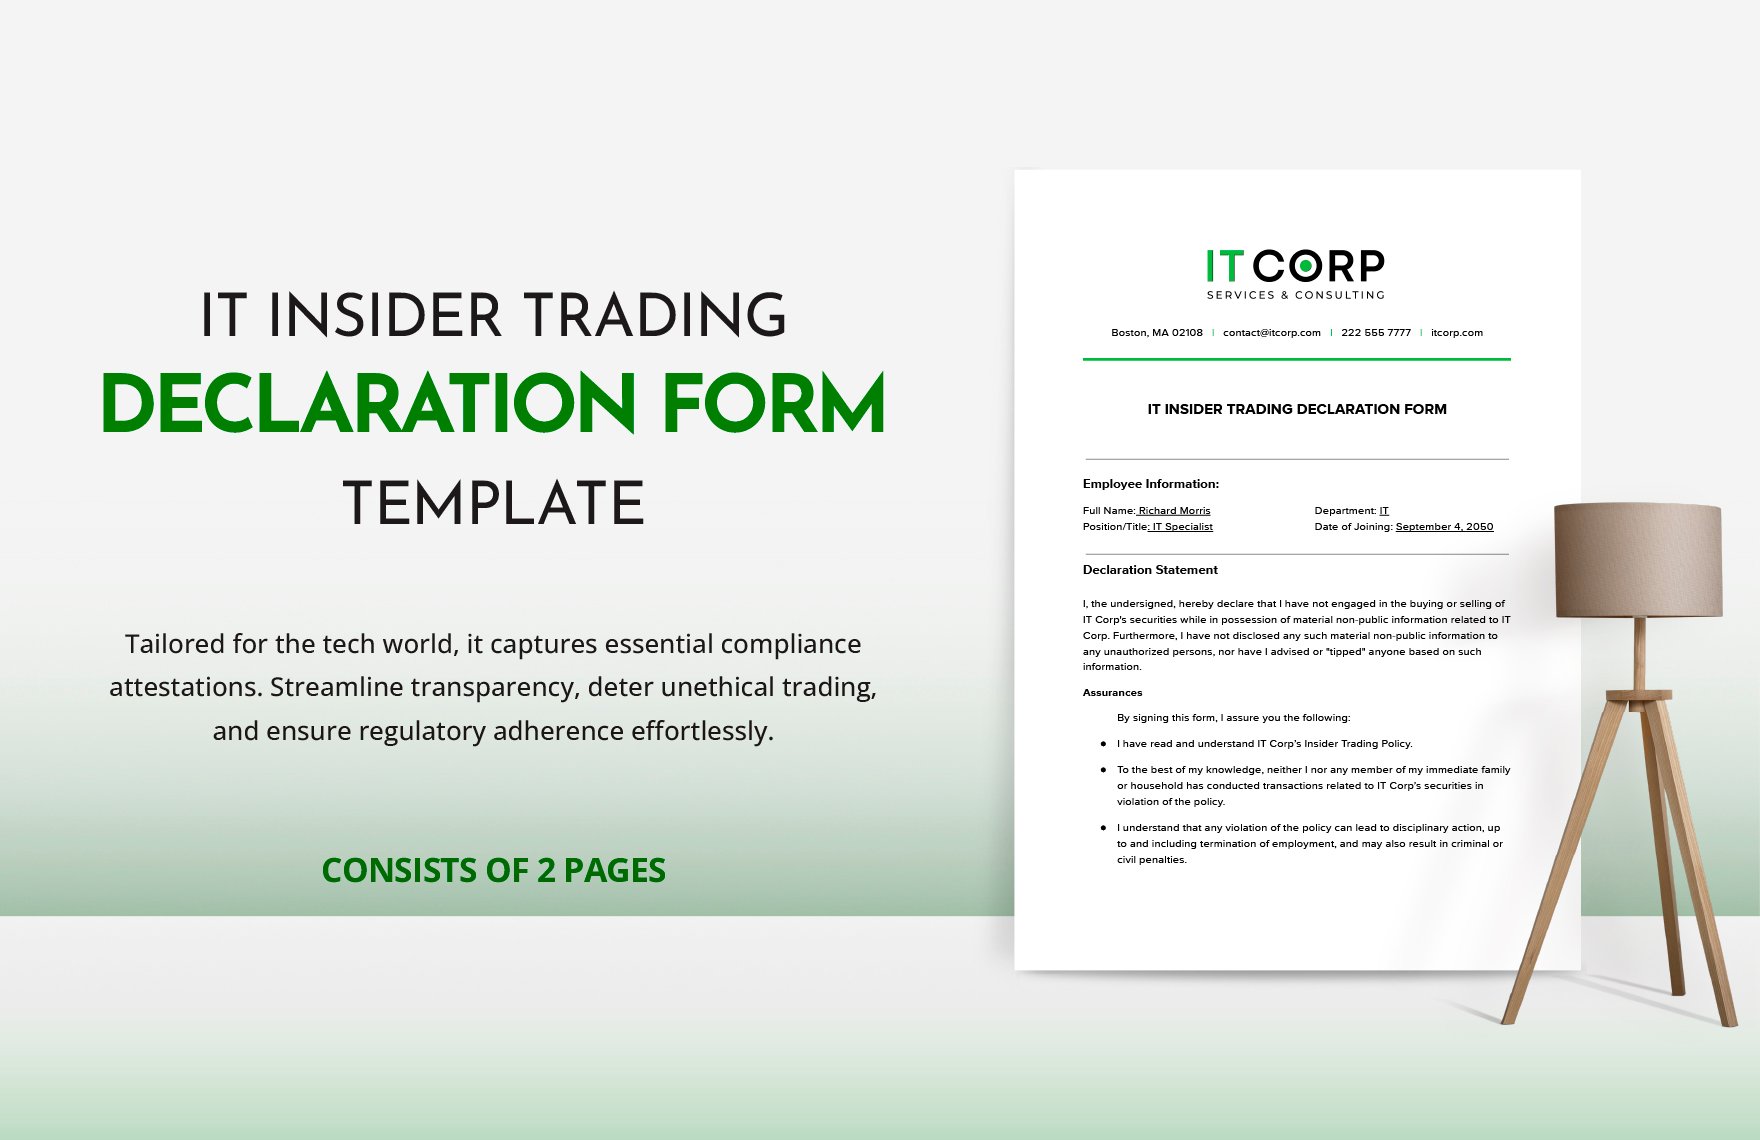 IT Insider Trading Declaration Form Template